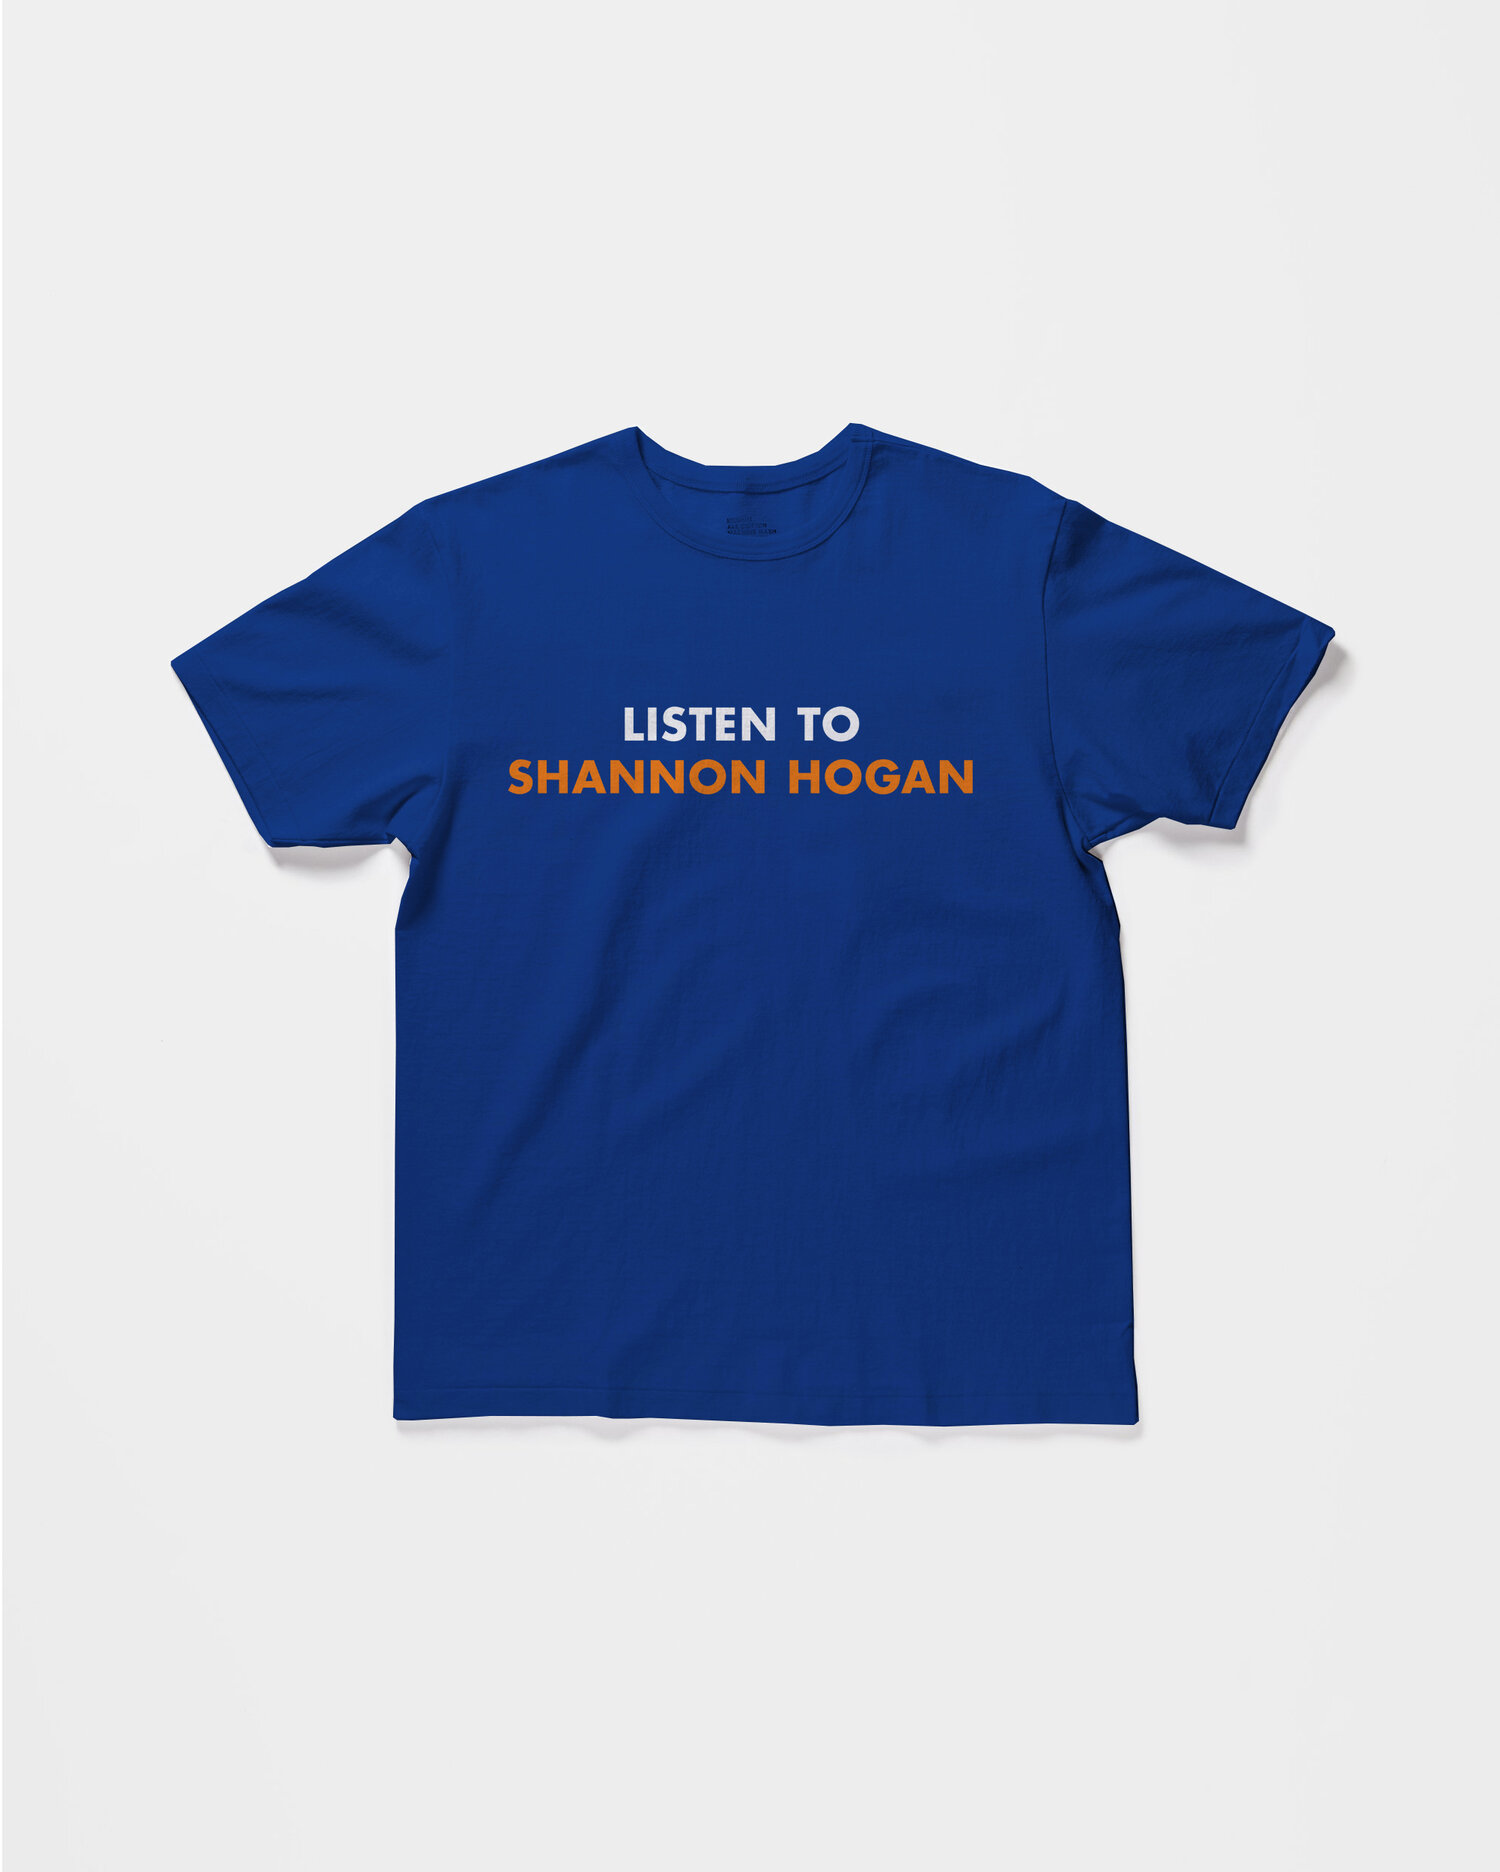 LISTEN TO SHANNON HOGAN — Dynasty Hockey Co.